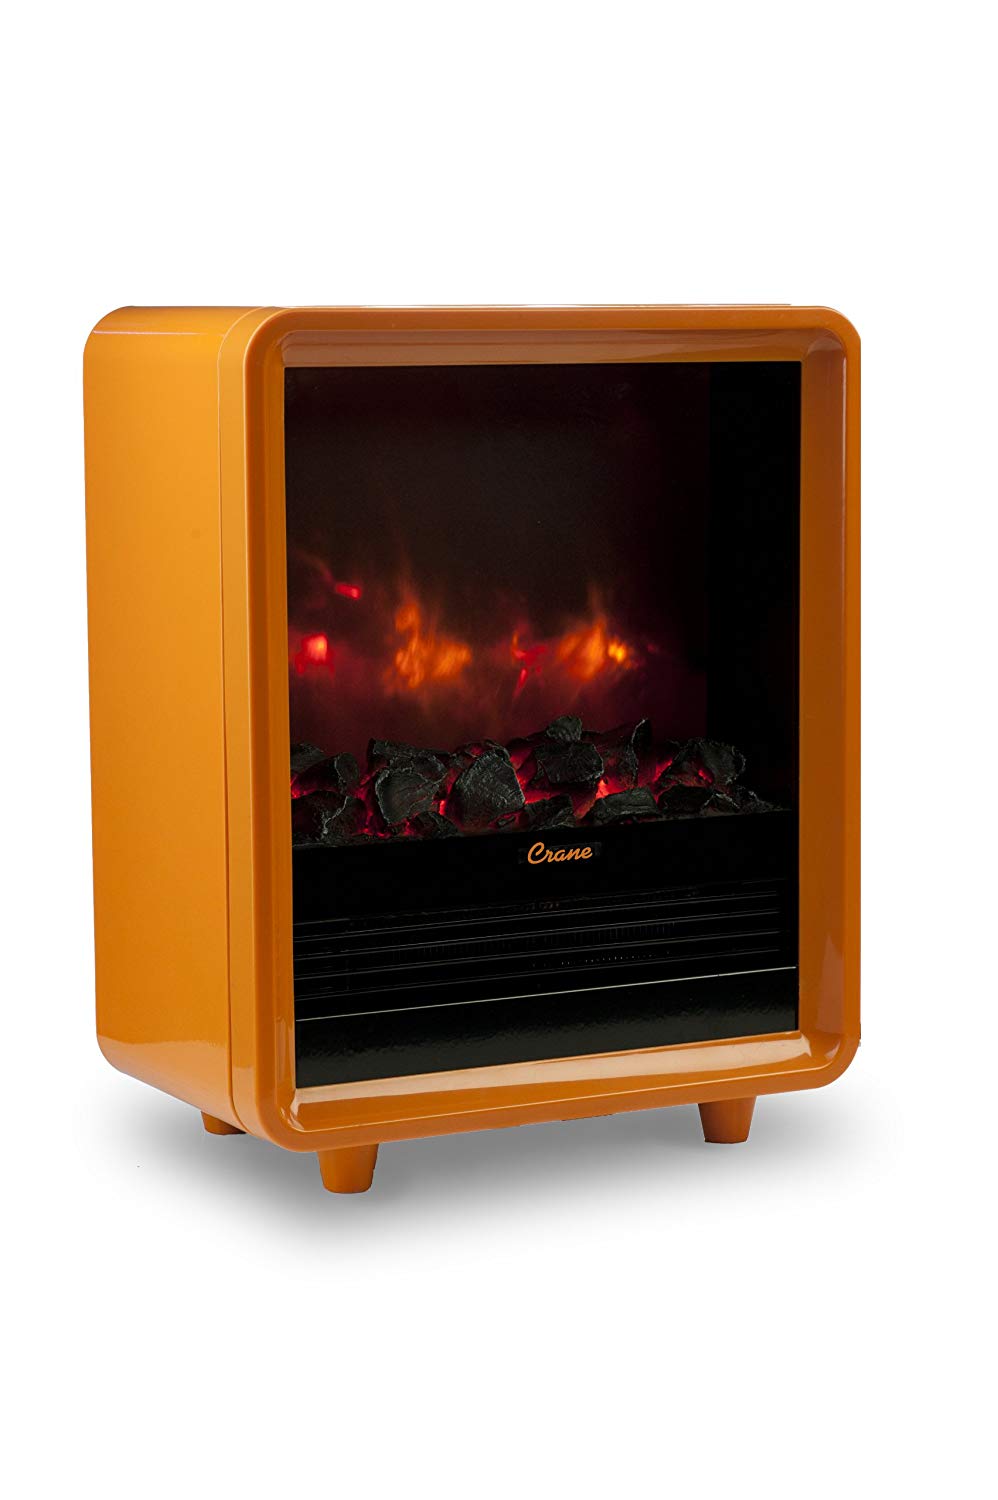 Heater that Looks Like A Fireplace Lovely Crane Mini Fireplace Heater orange Amazon Kitchen